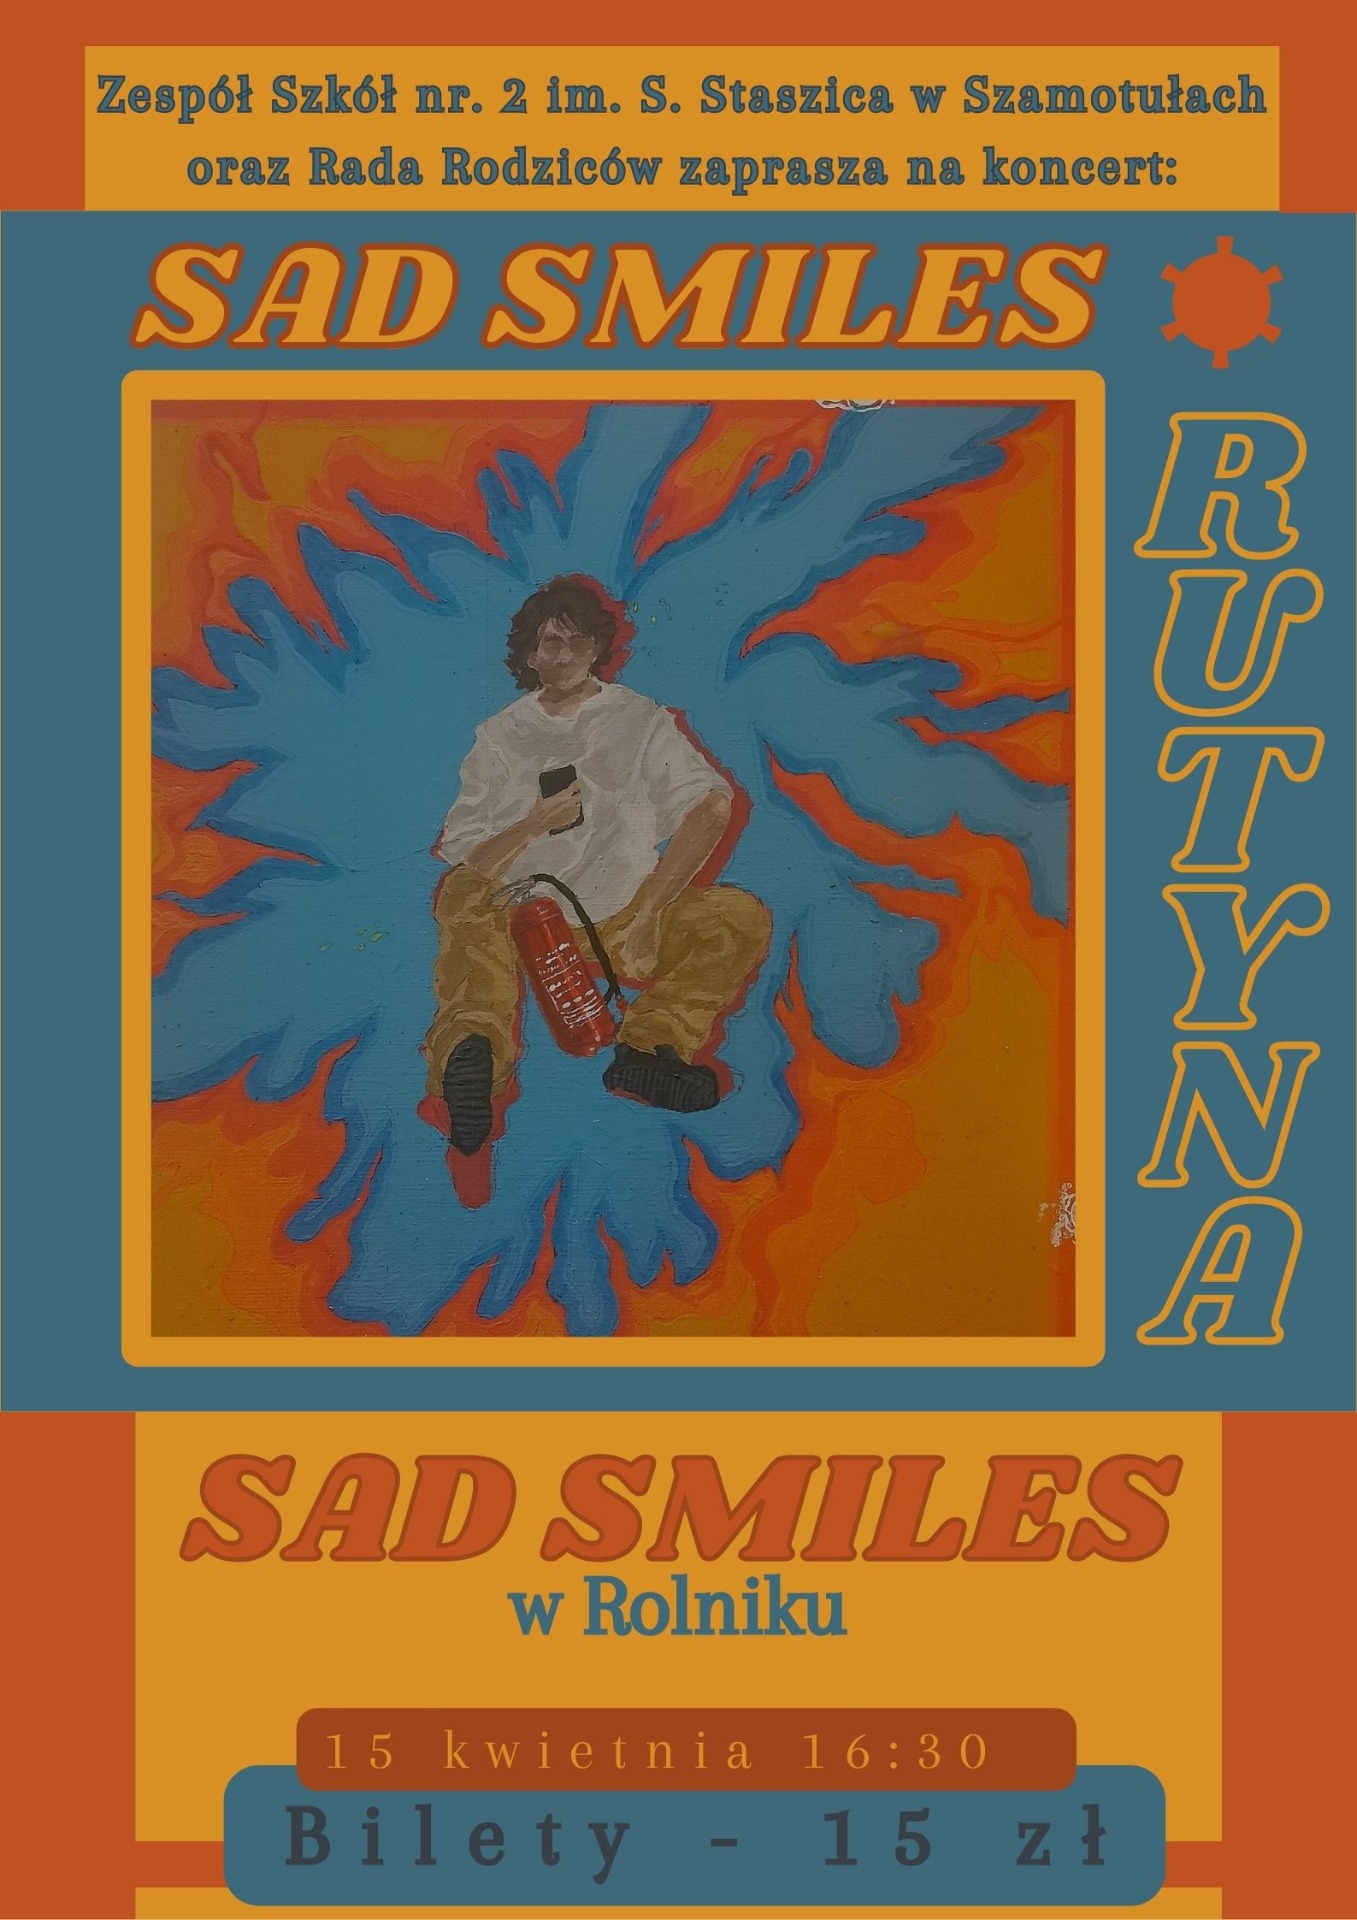 Sad smiles